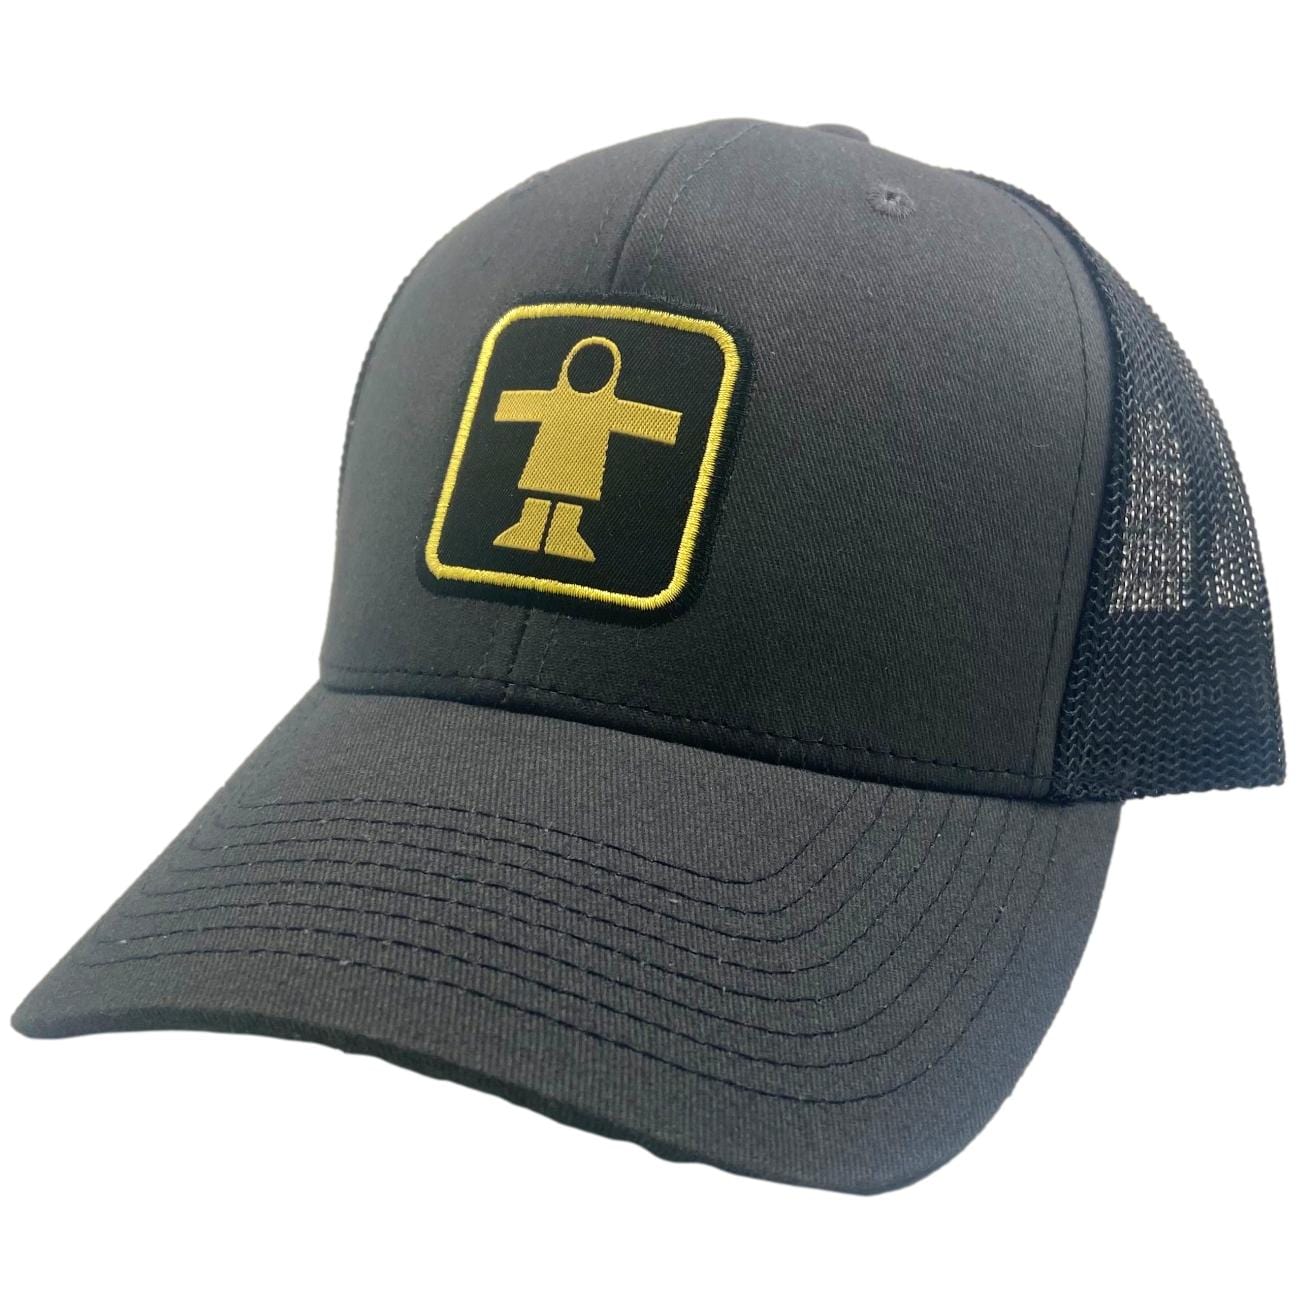 Guy Cotten Trucker Hat